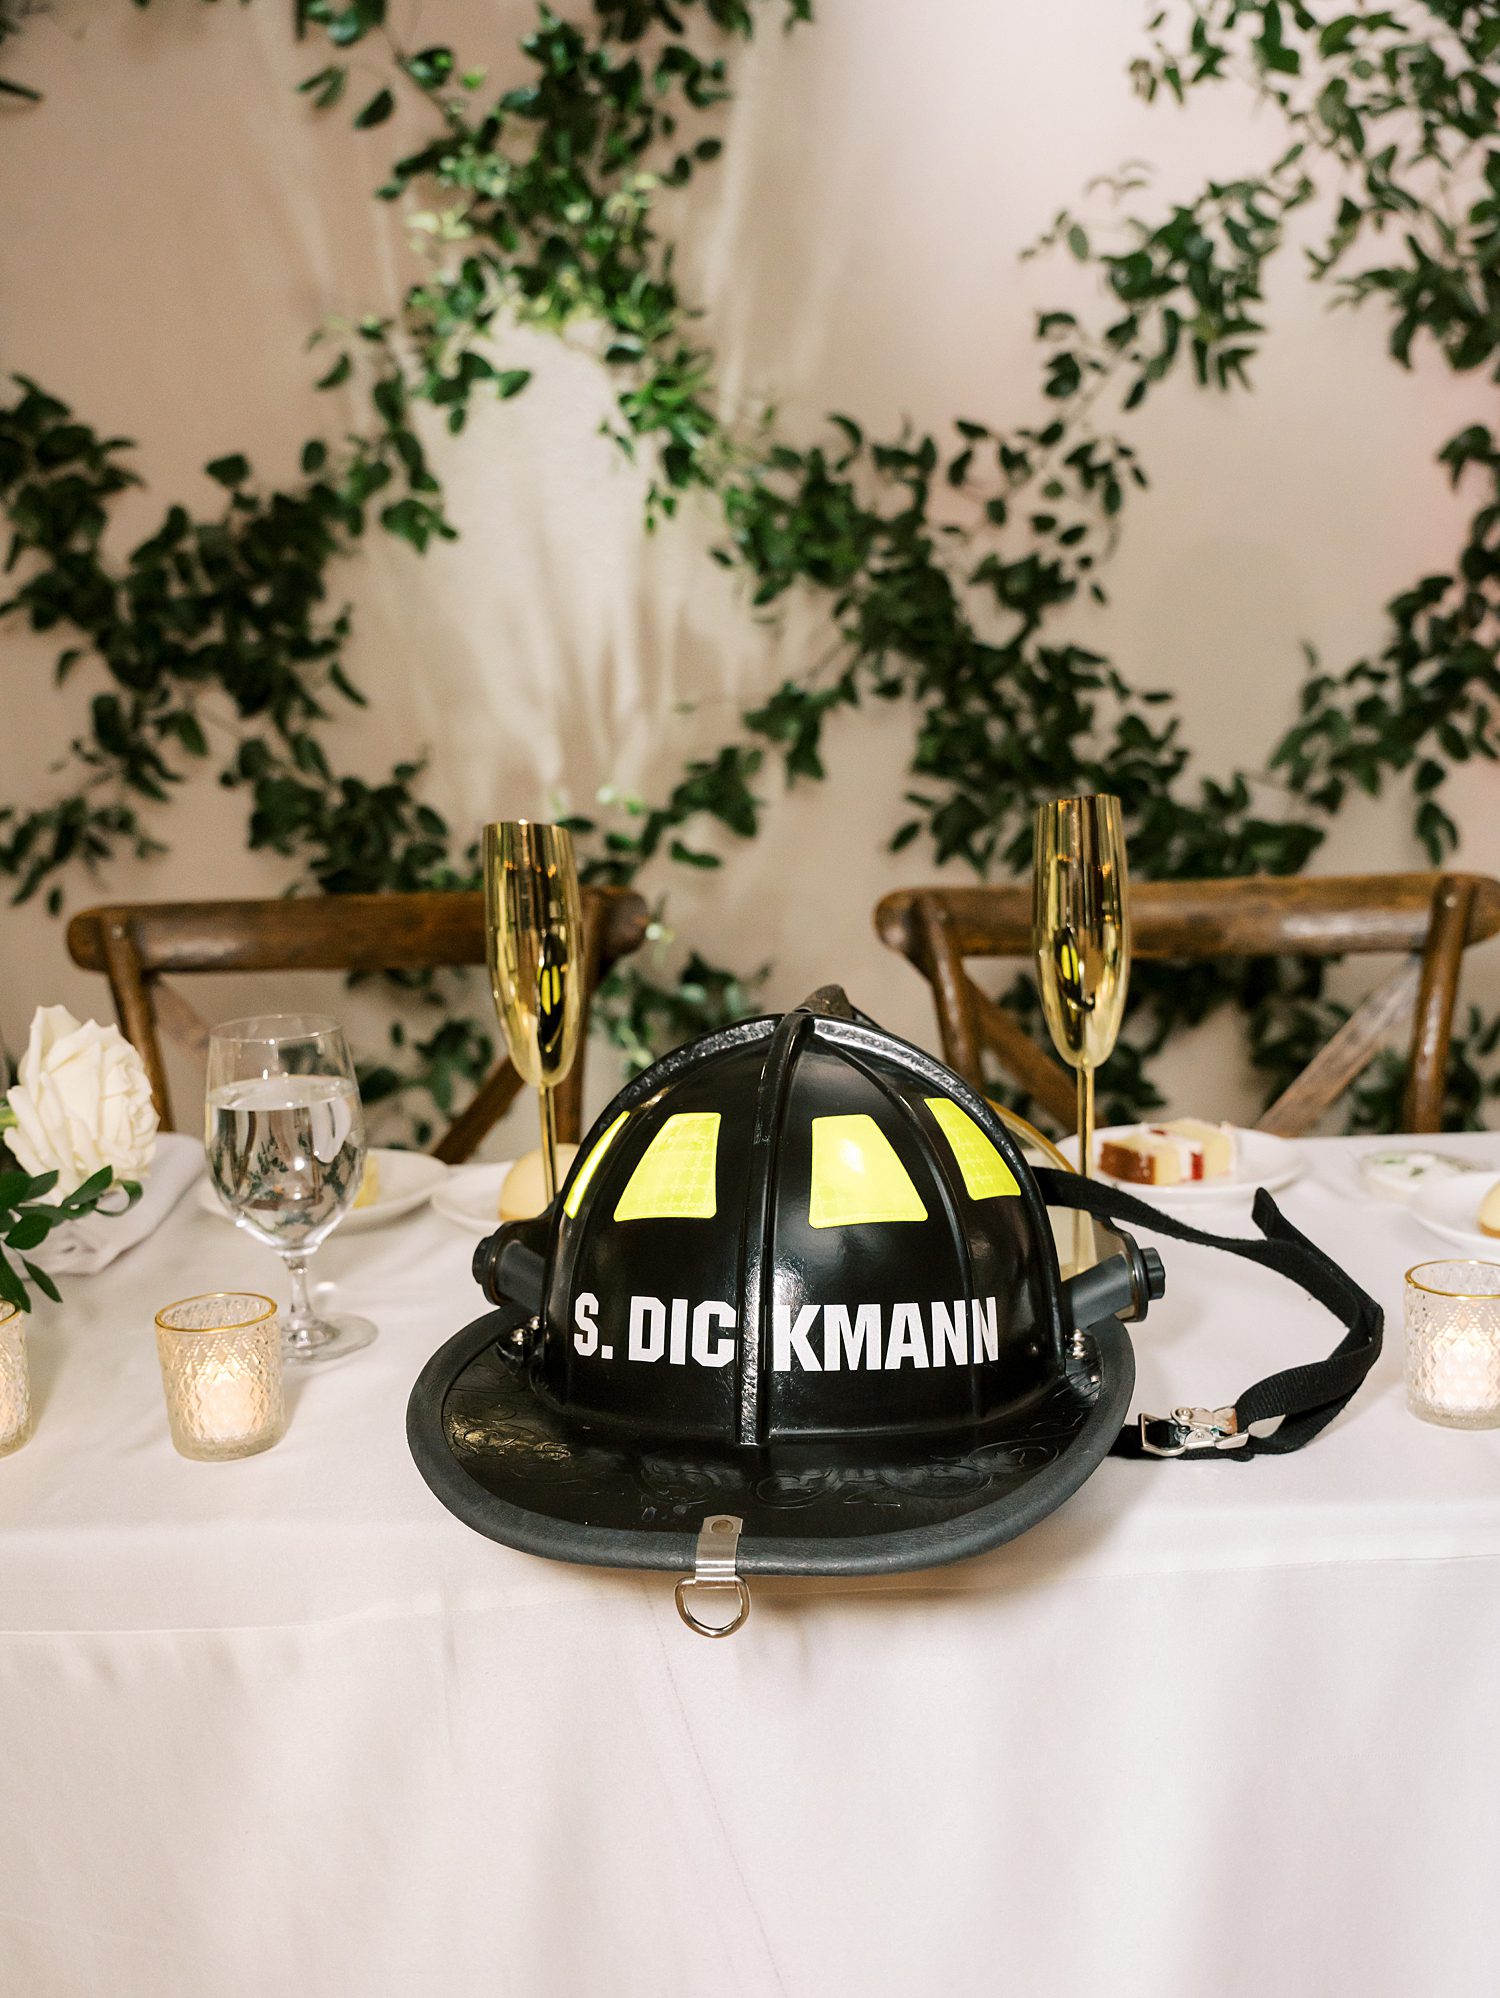 fireman's hat lays on table inside the Hotel Haya